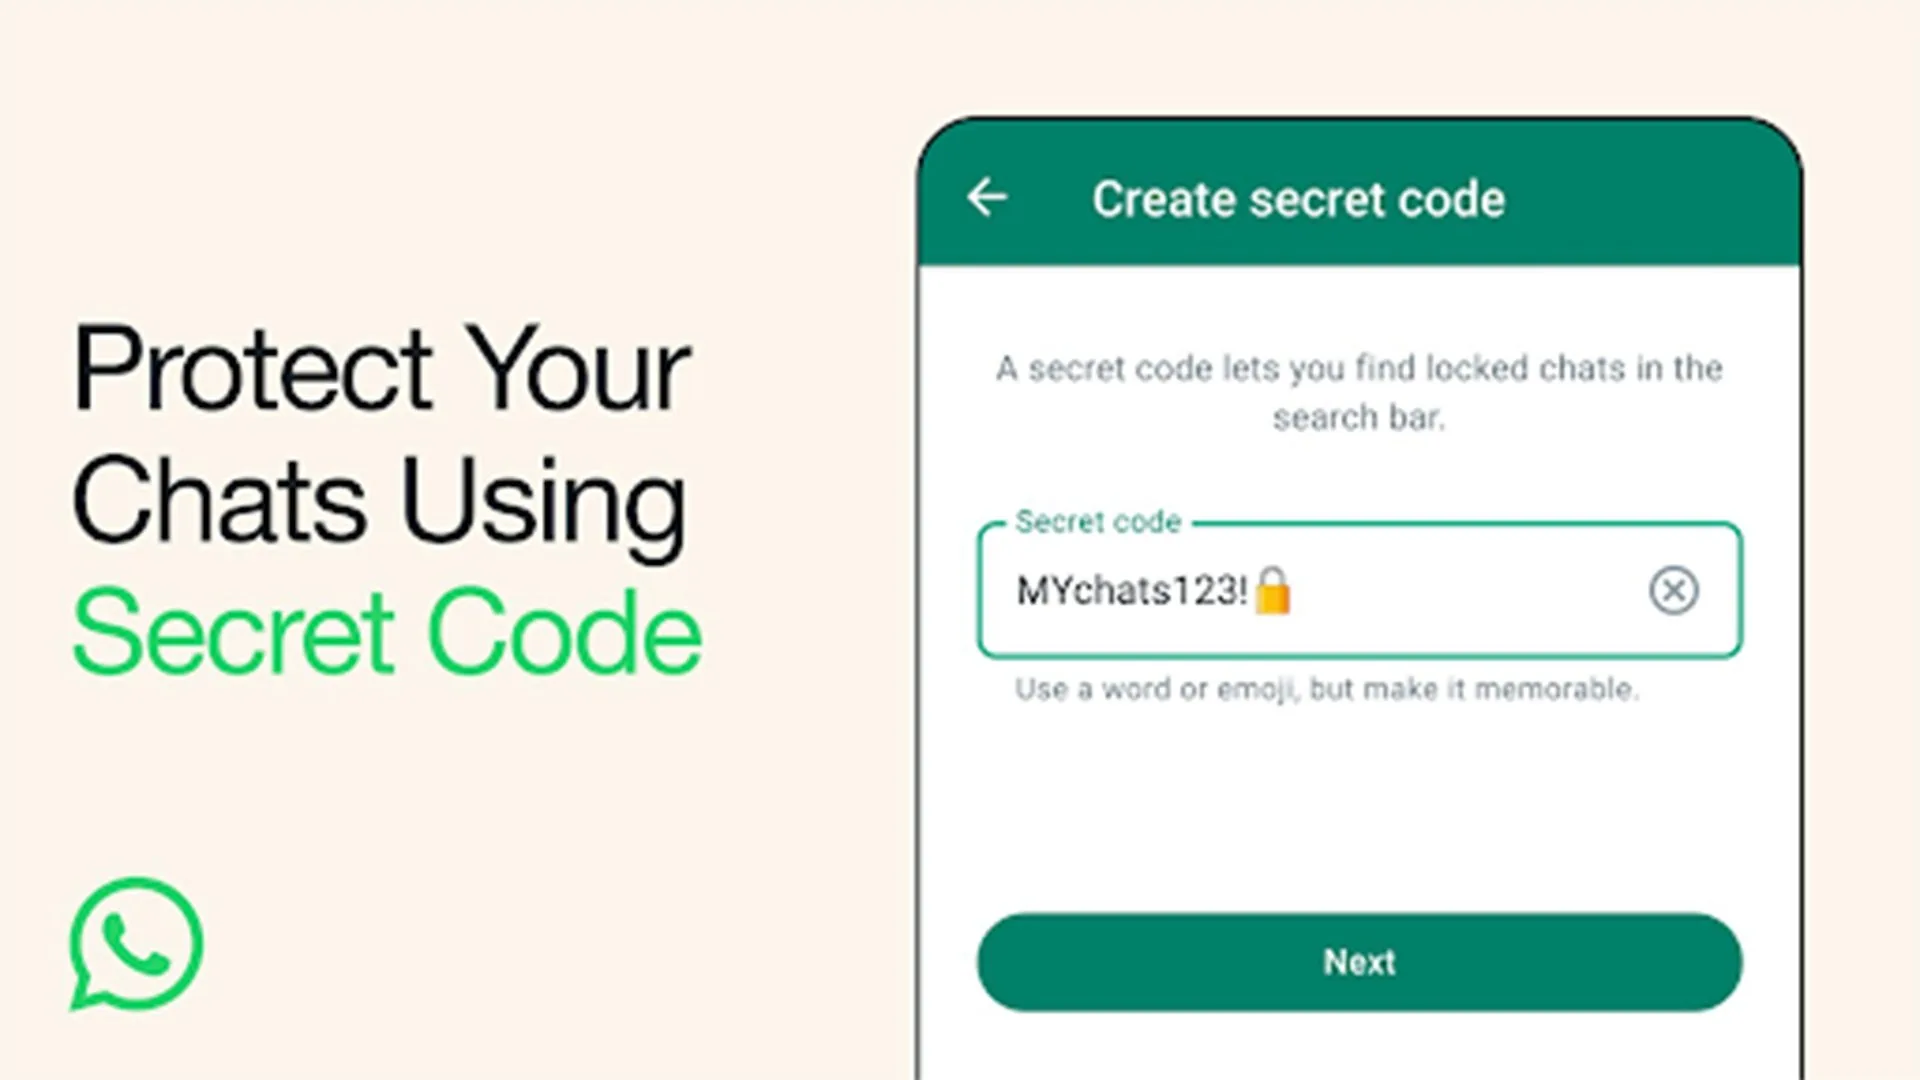 whatsapp secret code makes it easier to hide private chats 2n3k.1920